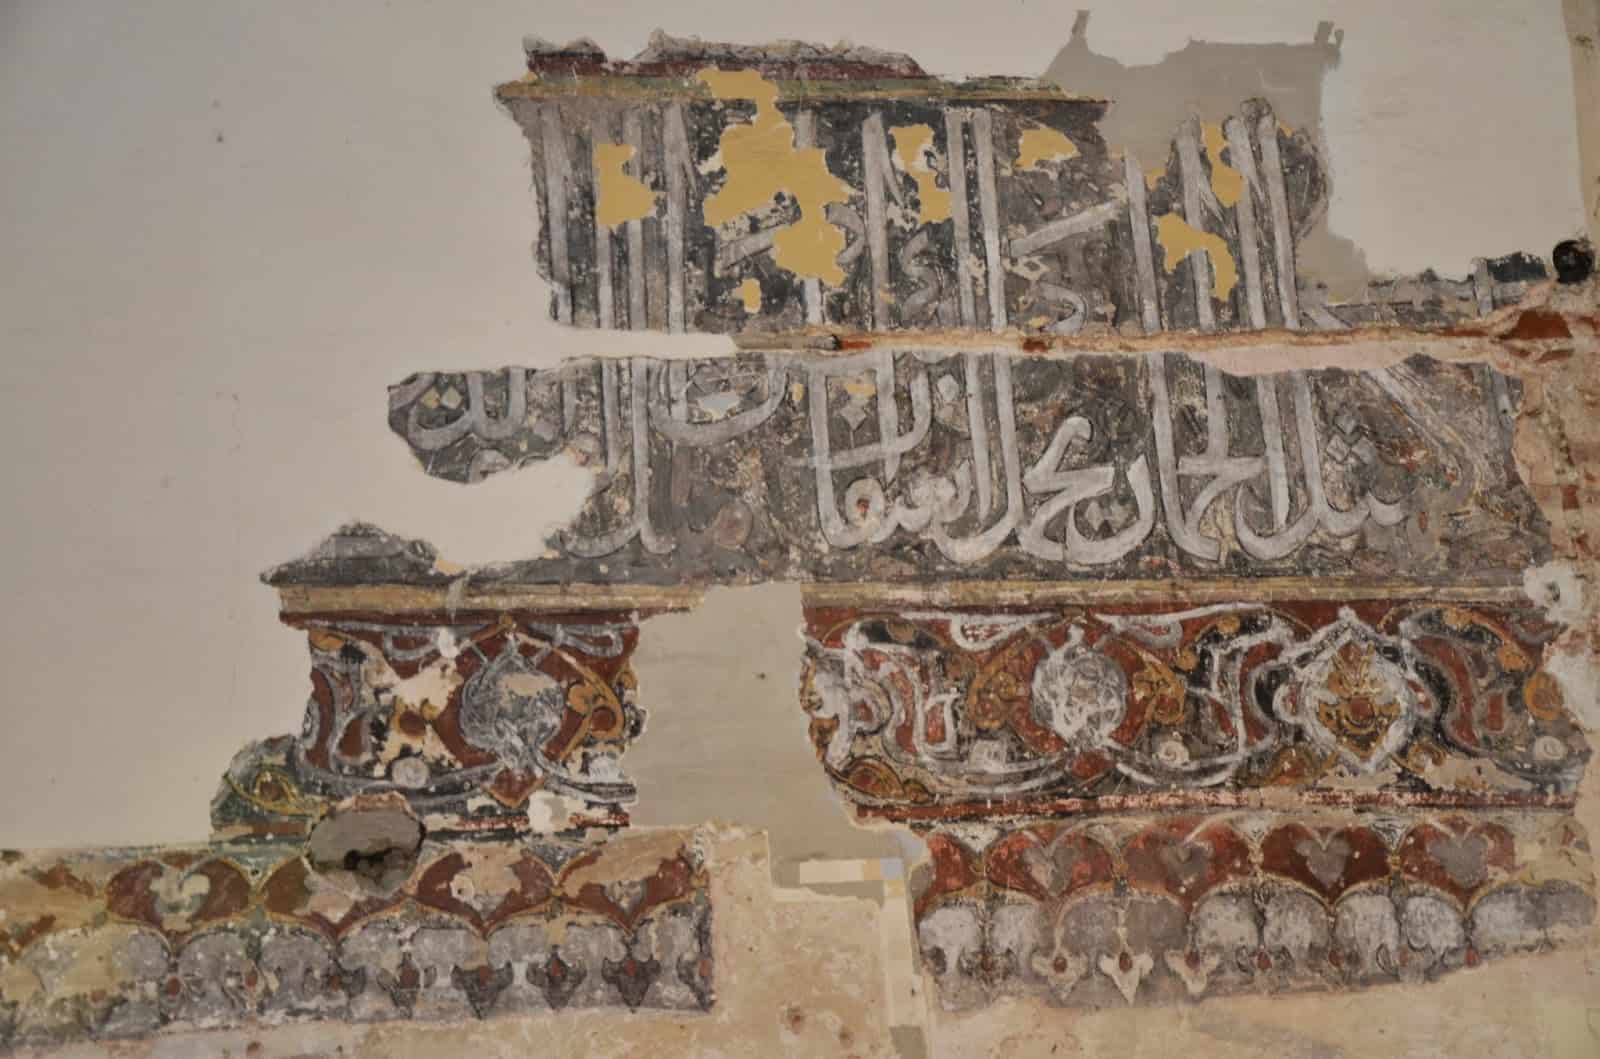 Quranic script inside the Alaca Imaret Mosque in Thessaloniki, Greece